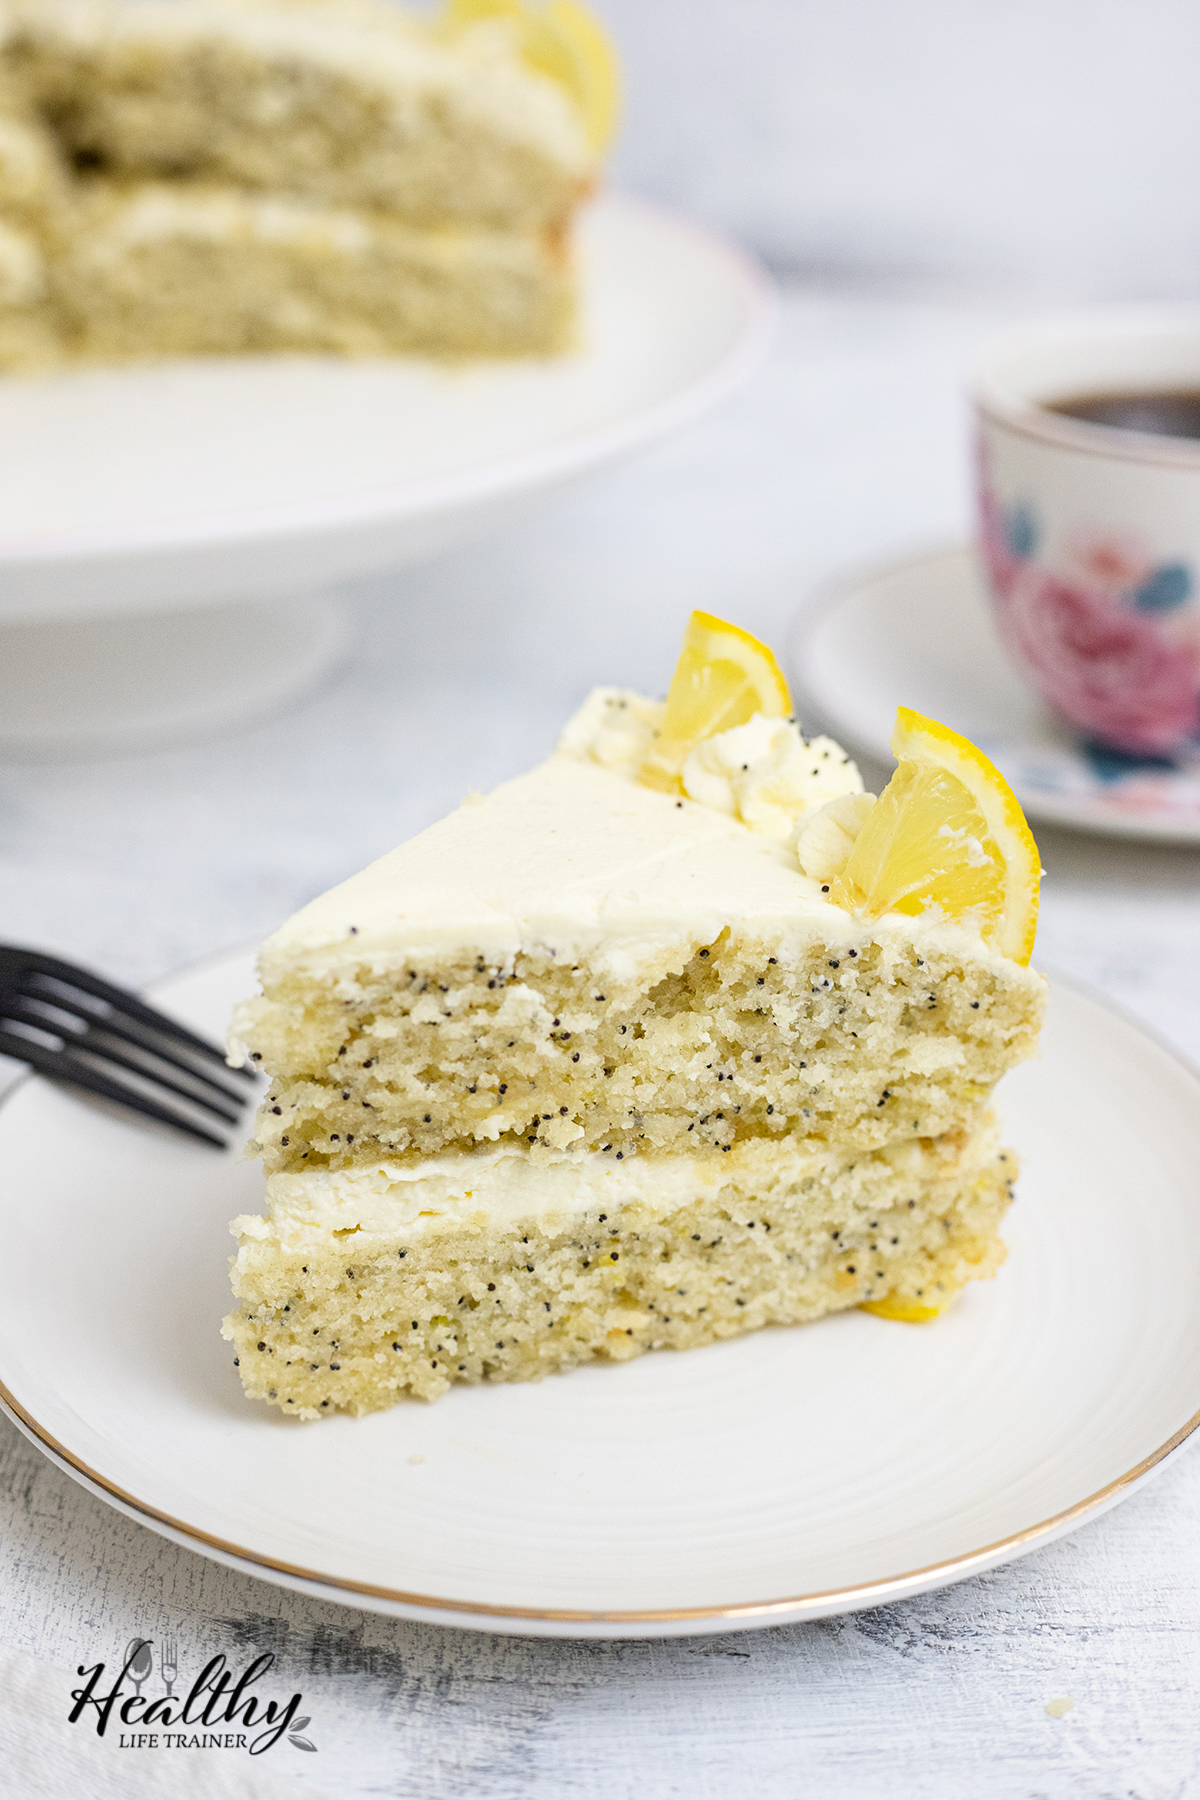 a big slice of the Lemon Poppyseed Cake